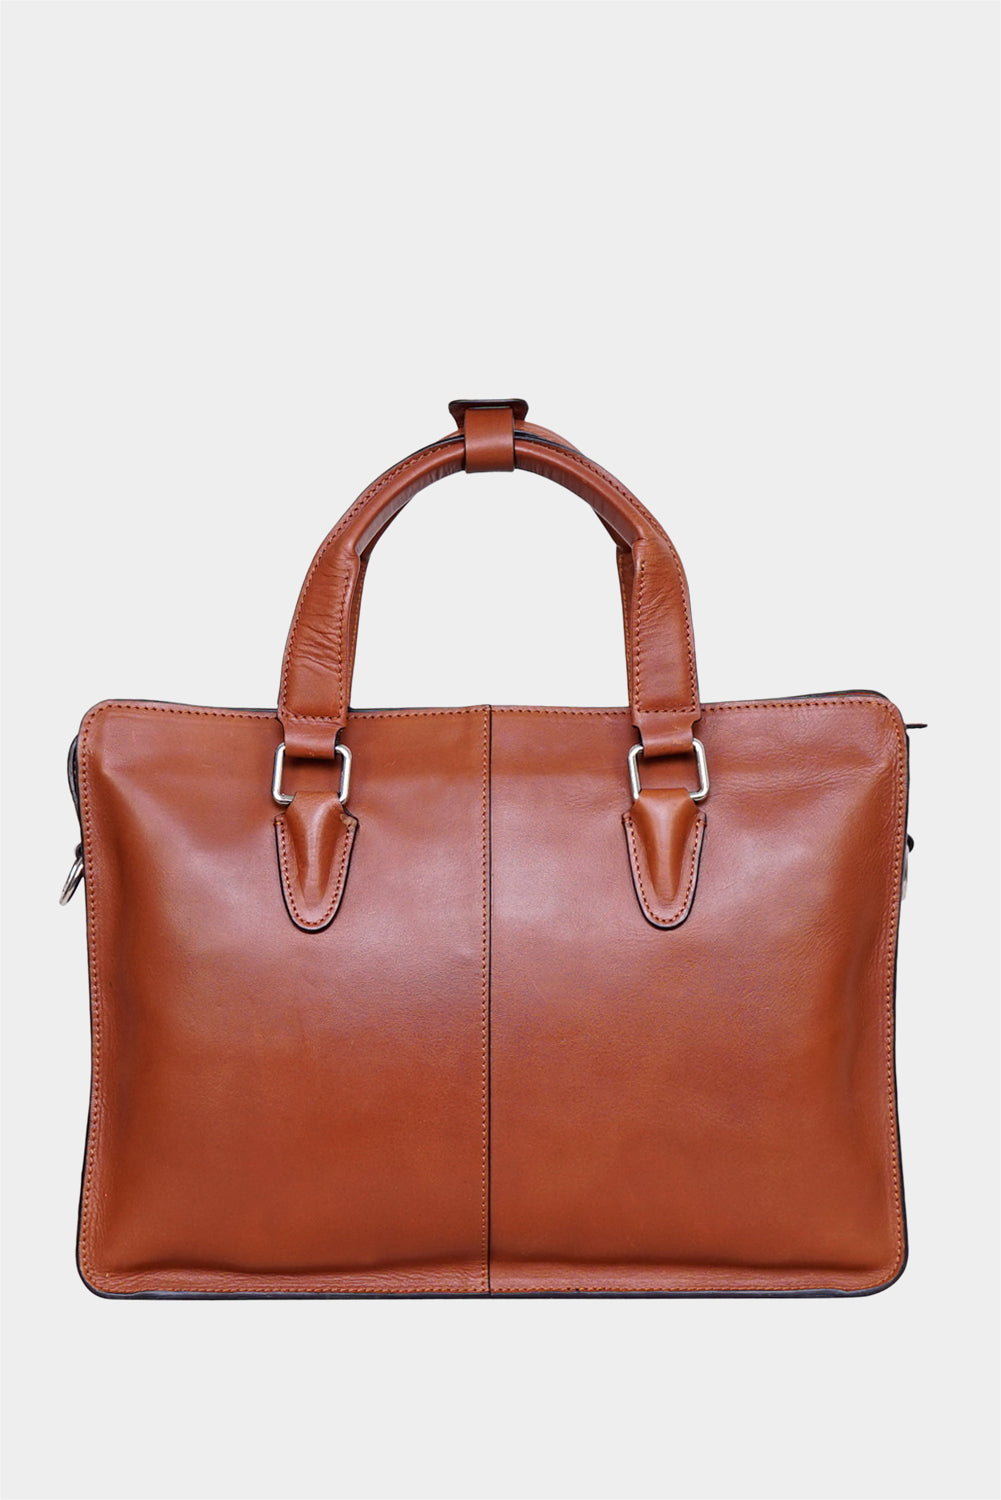 Buy Leather Bag for Men - Metro | Auroville.com